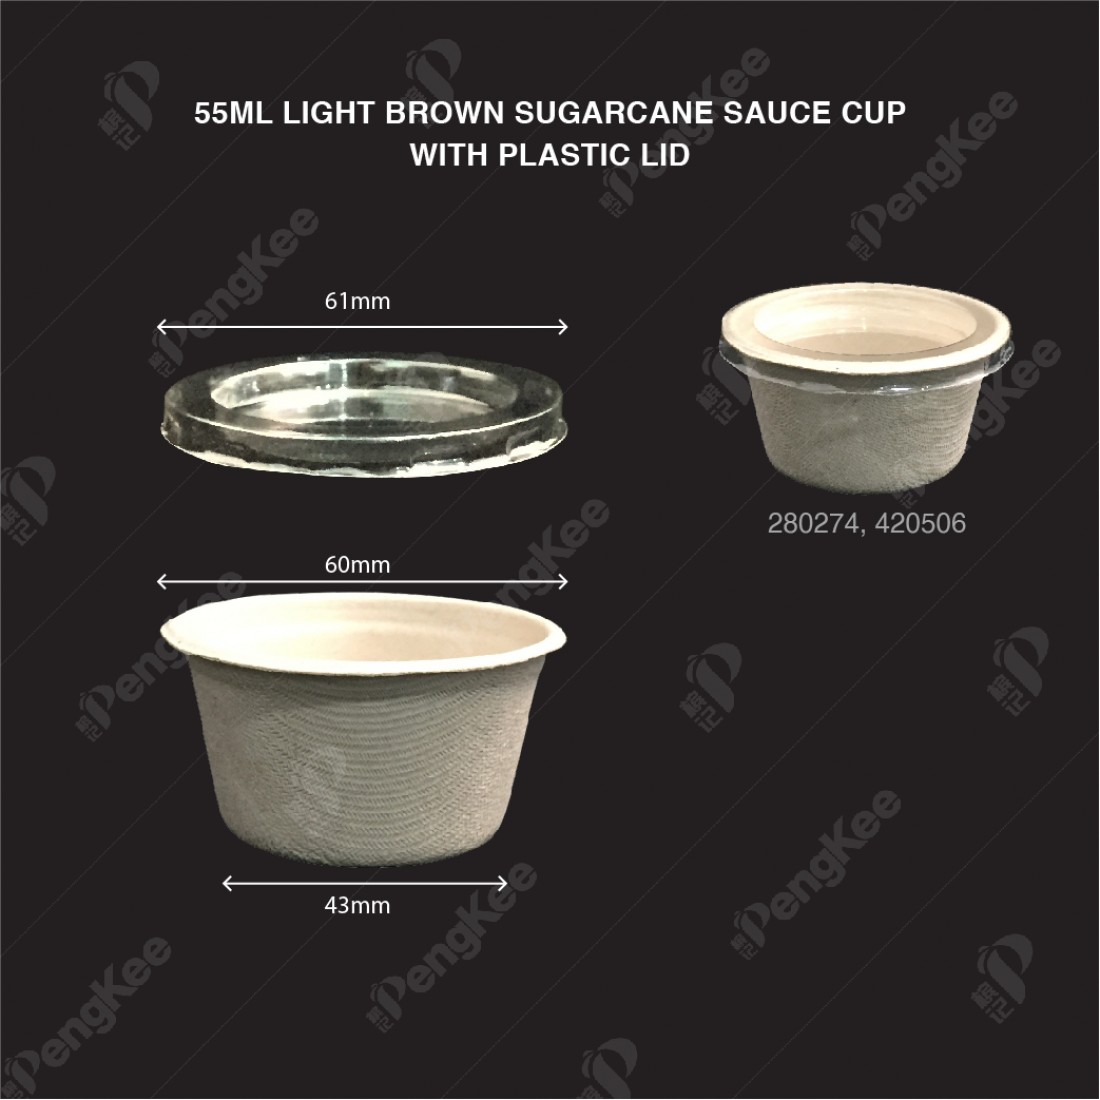 PACKET-ULN-C SUGARCANE SAUCE CUP 55ml (BROWN)